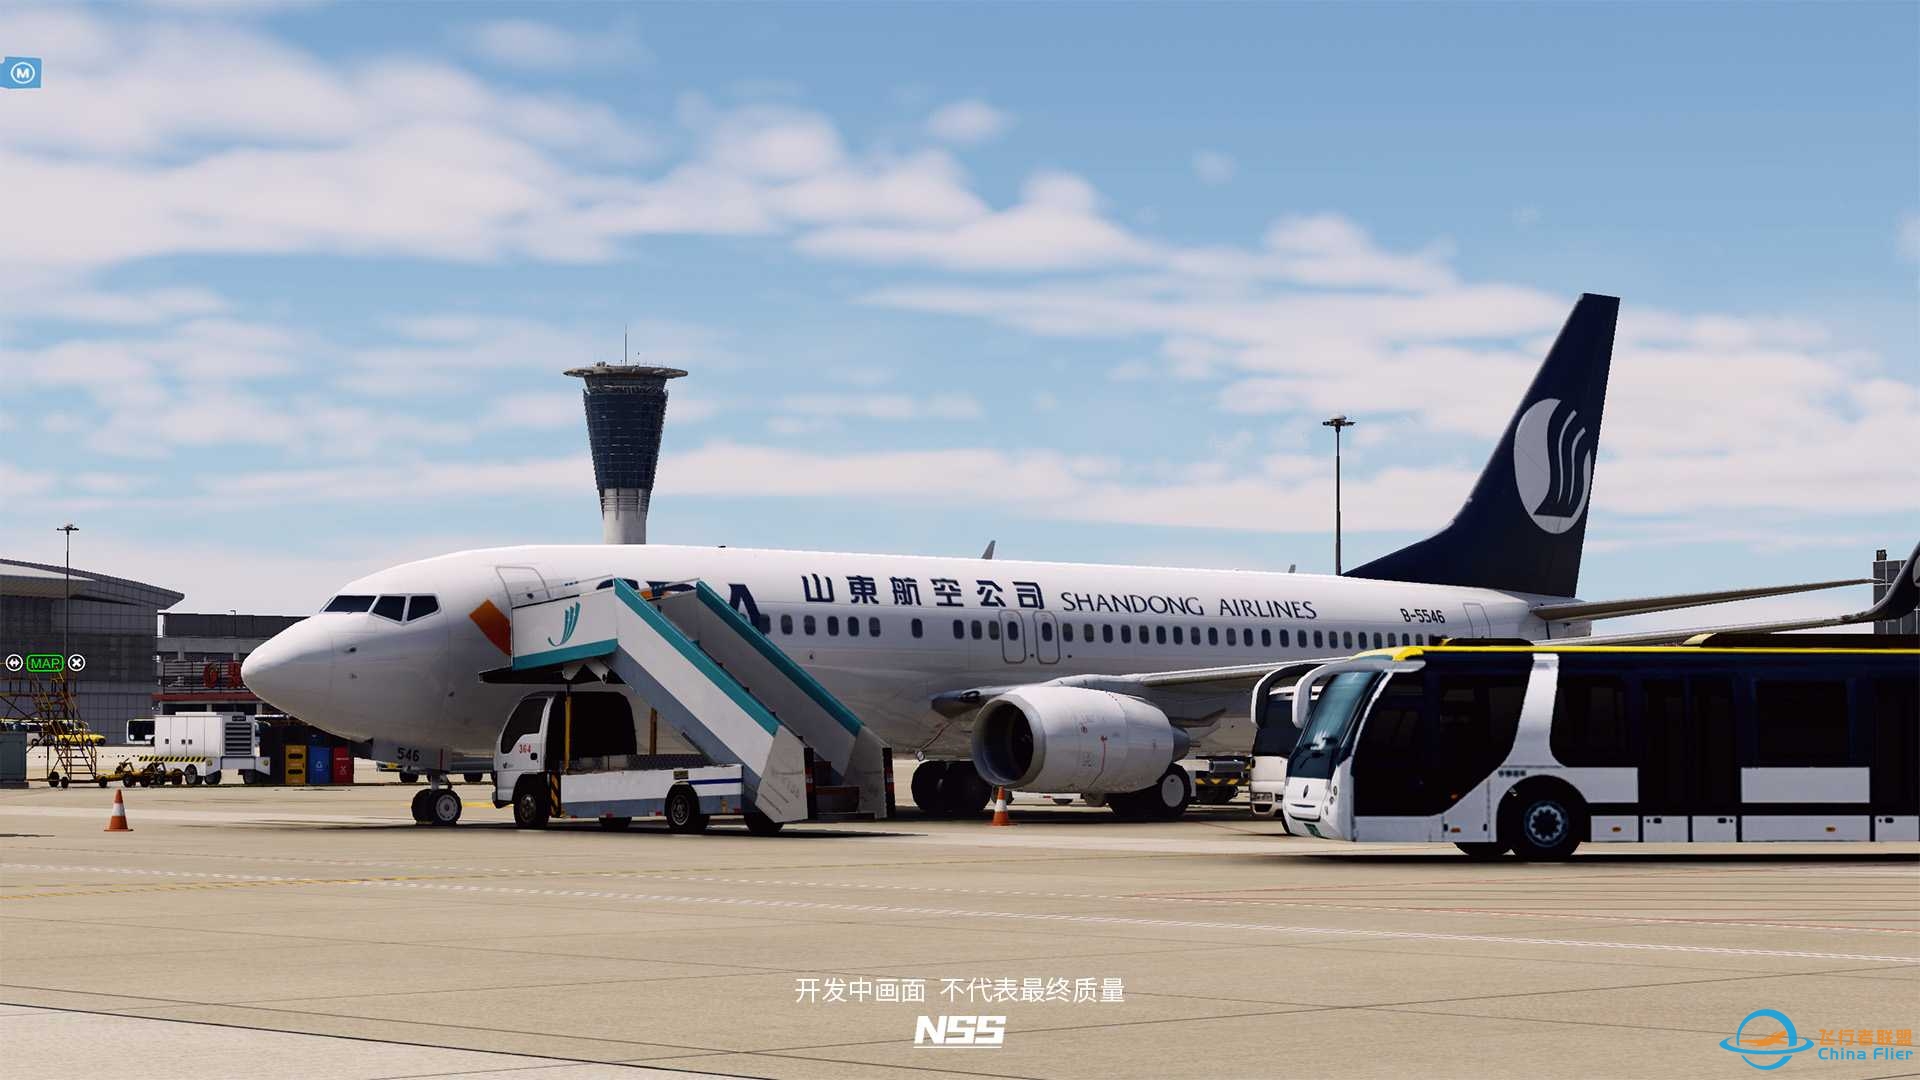 NSS地景开发组 | ZSJN | 济南遥墙国际机场项目最新进展-9399 